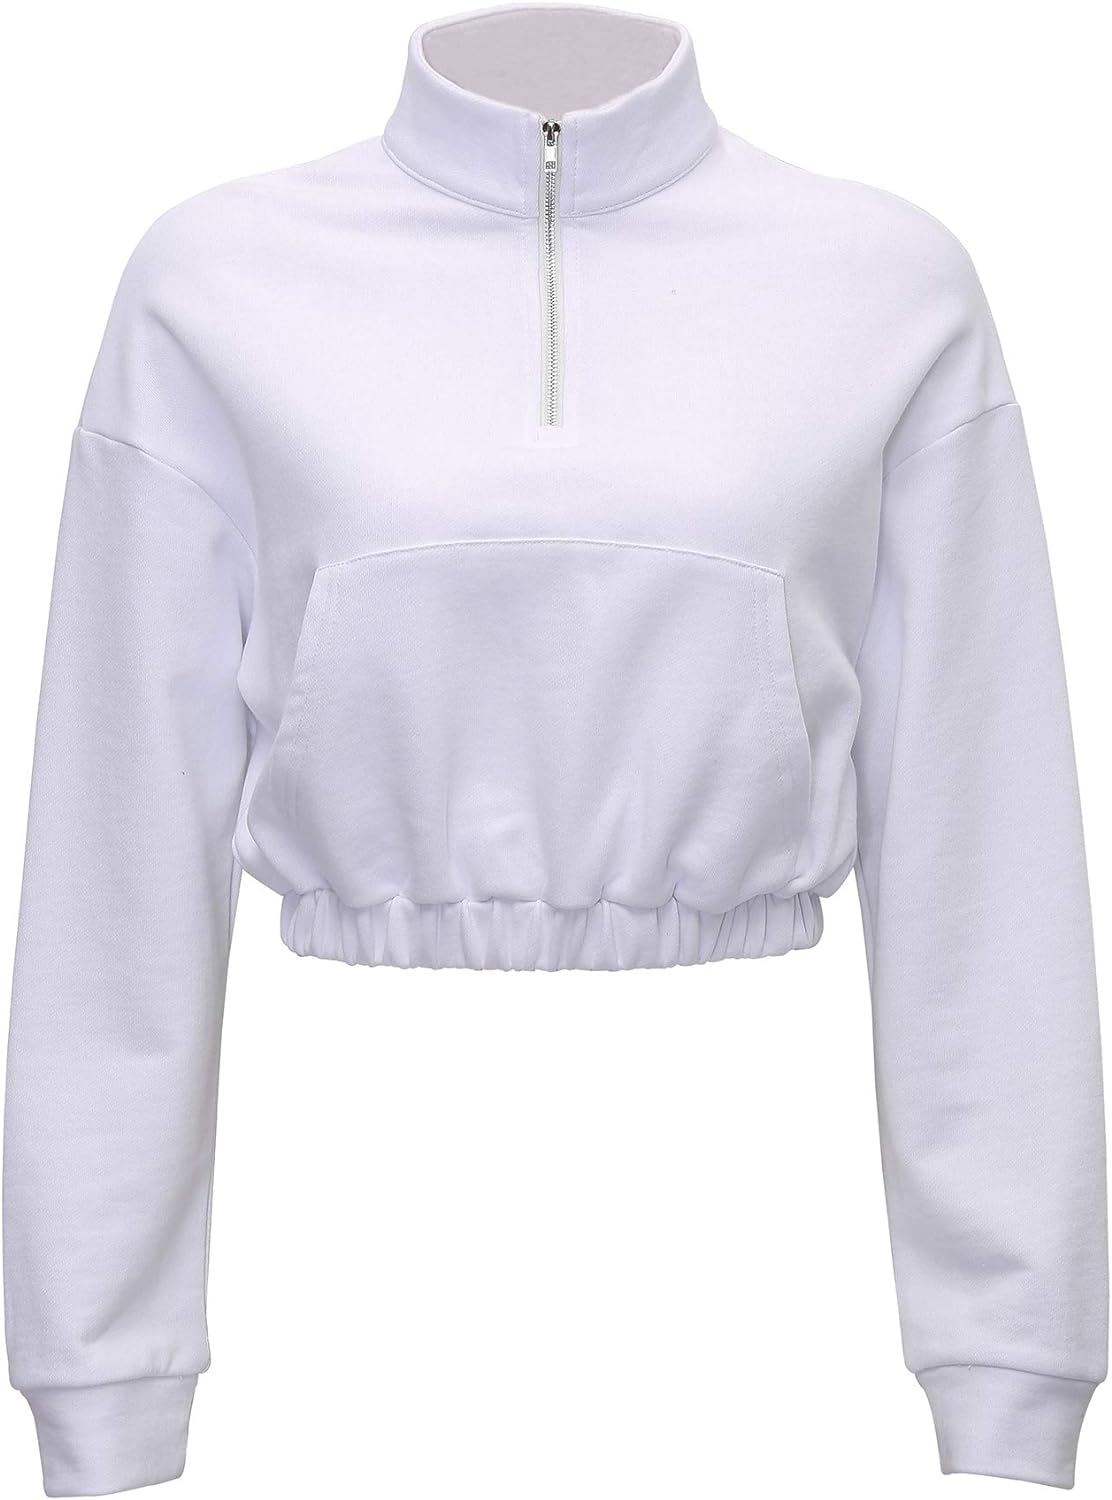 NTG Fad White / Small Cropped Quarter Zip Pullover Sweatshirt Hoodie Crop Top